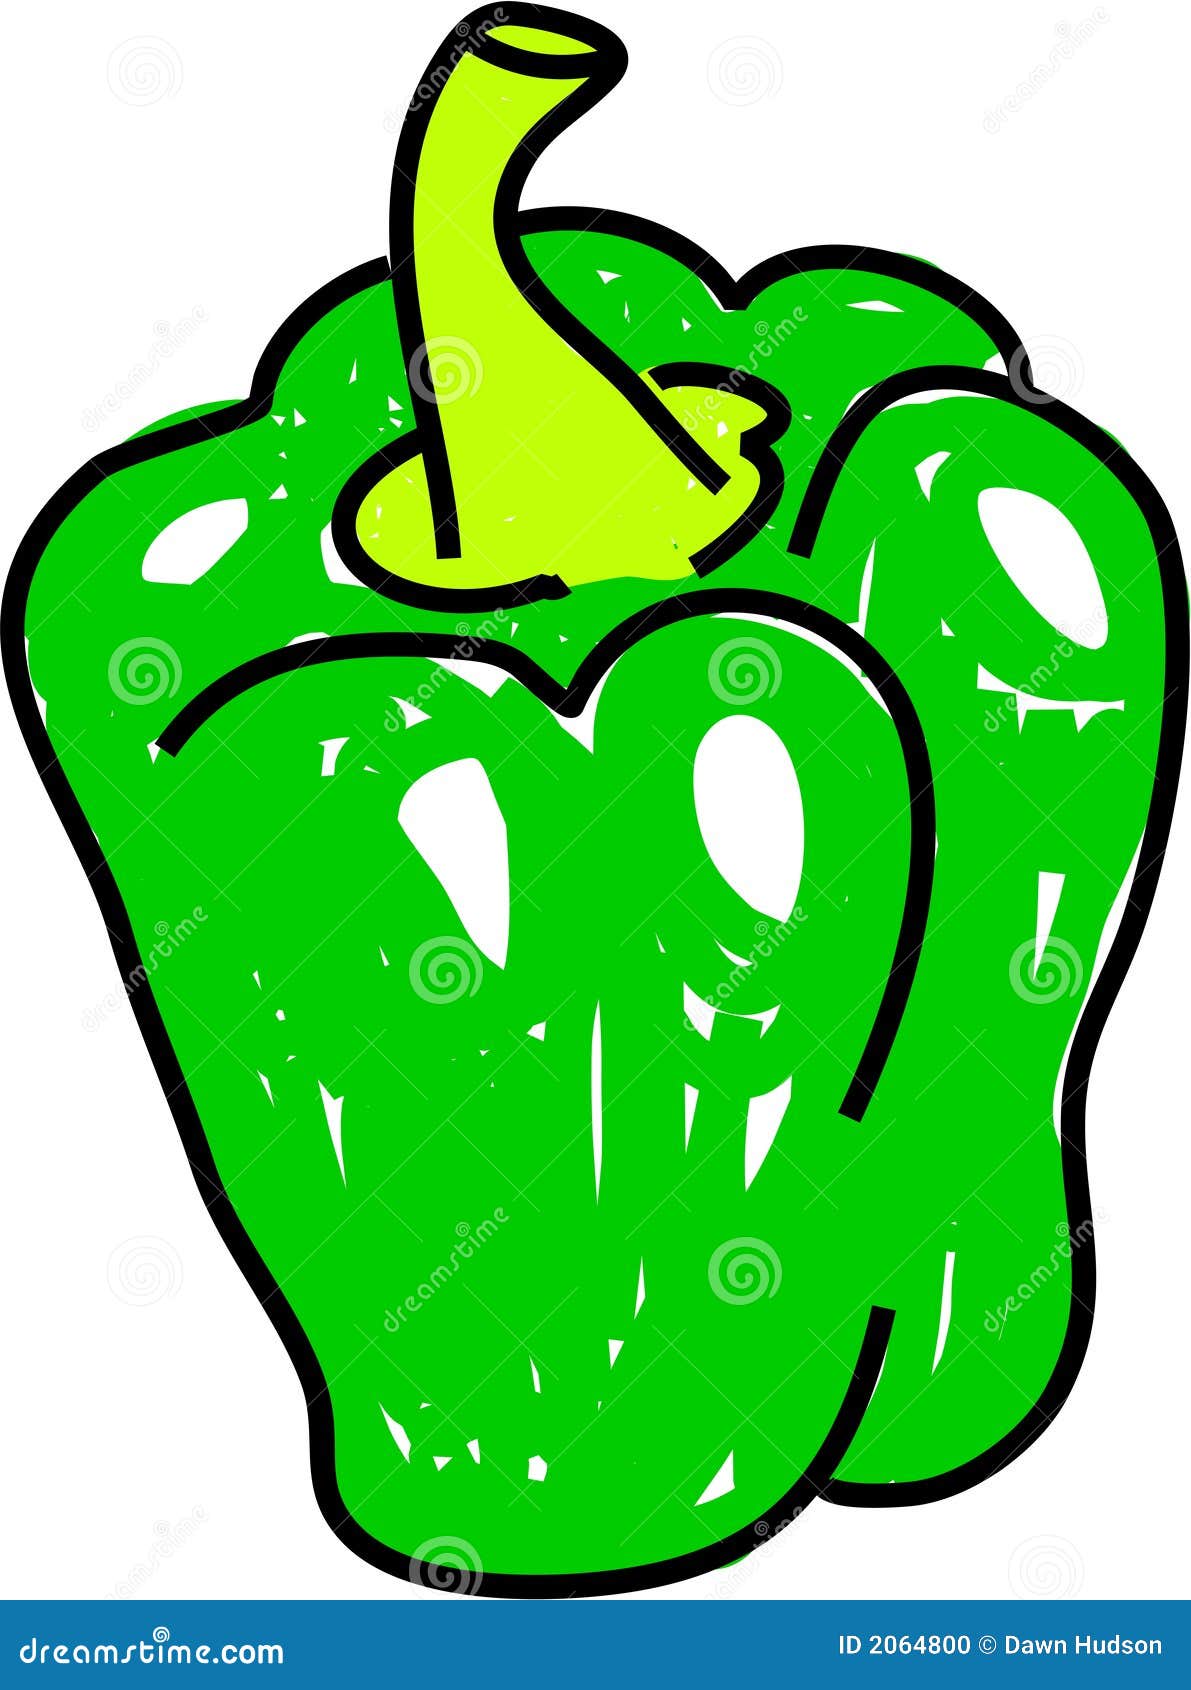 clipart green pepper - photo #23